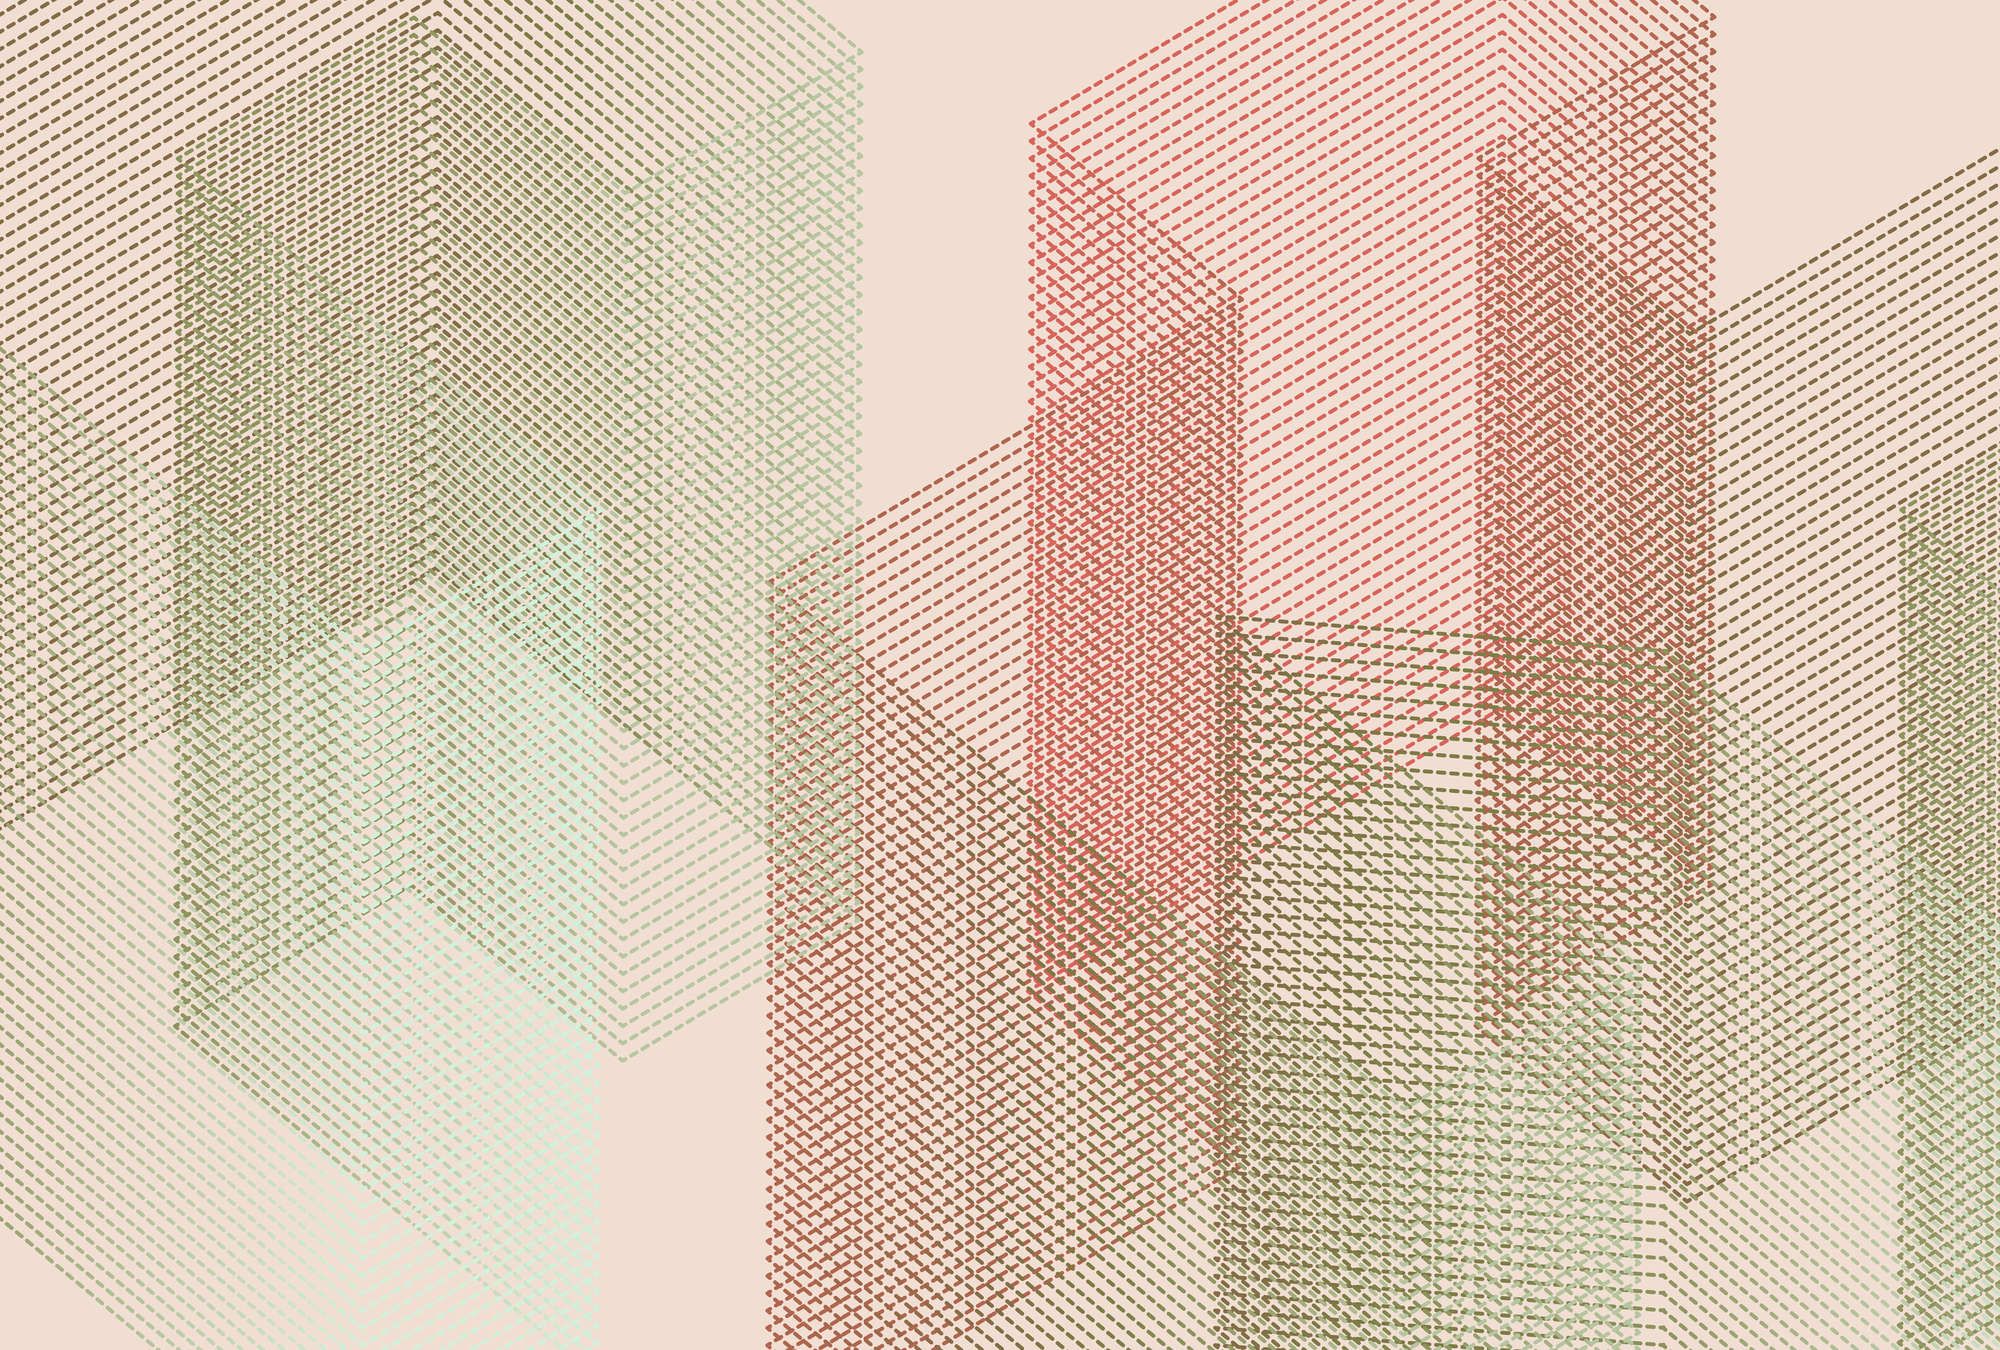             Fototapete »mesh 2« - Abstraktes 3D-Design – Rot, Grün | Mattes, Glattes Vlies
        